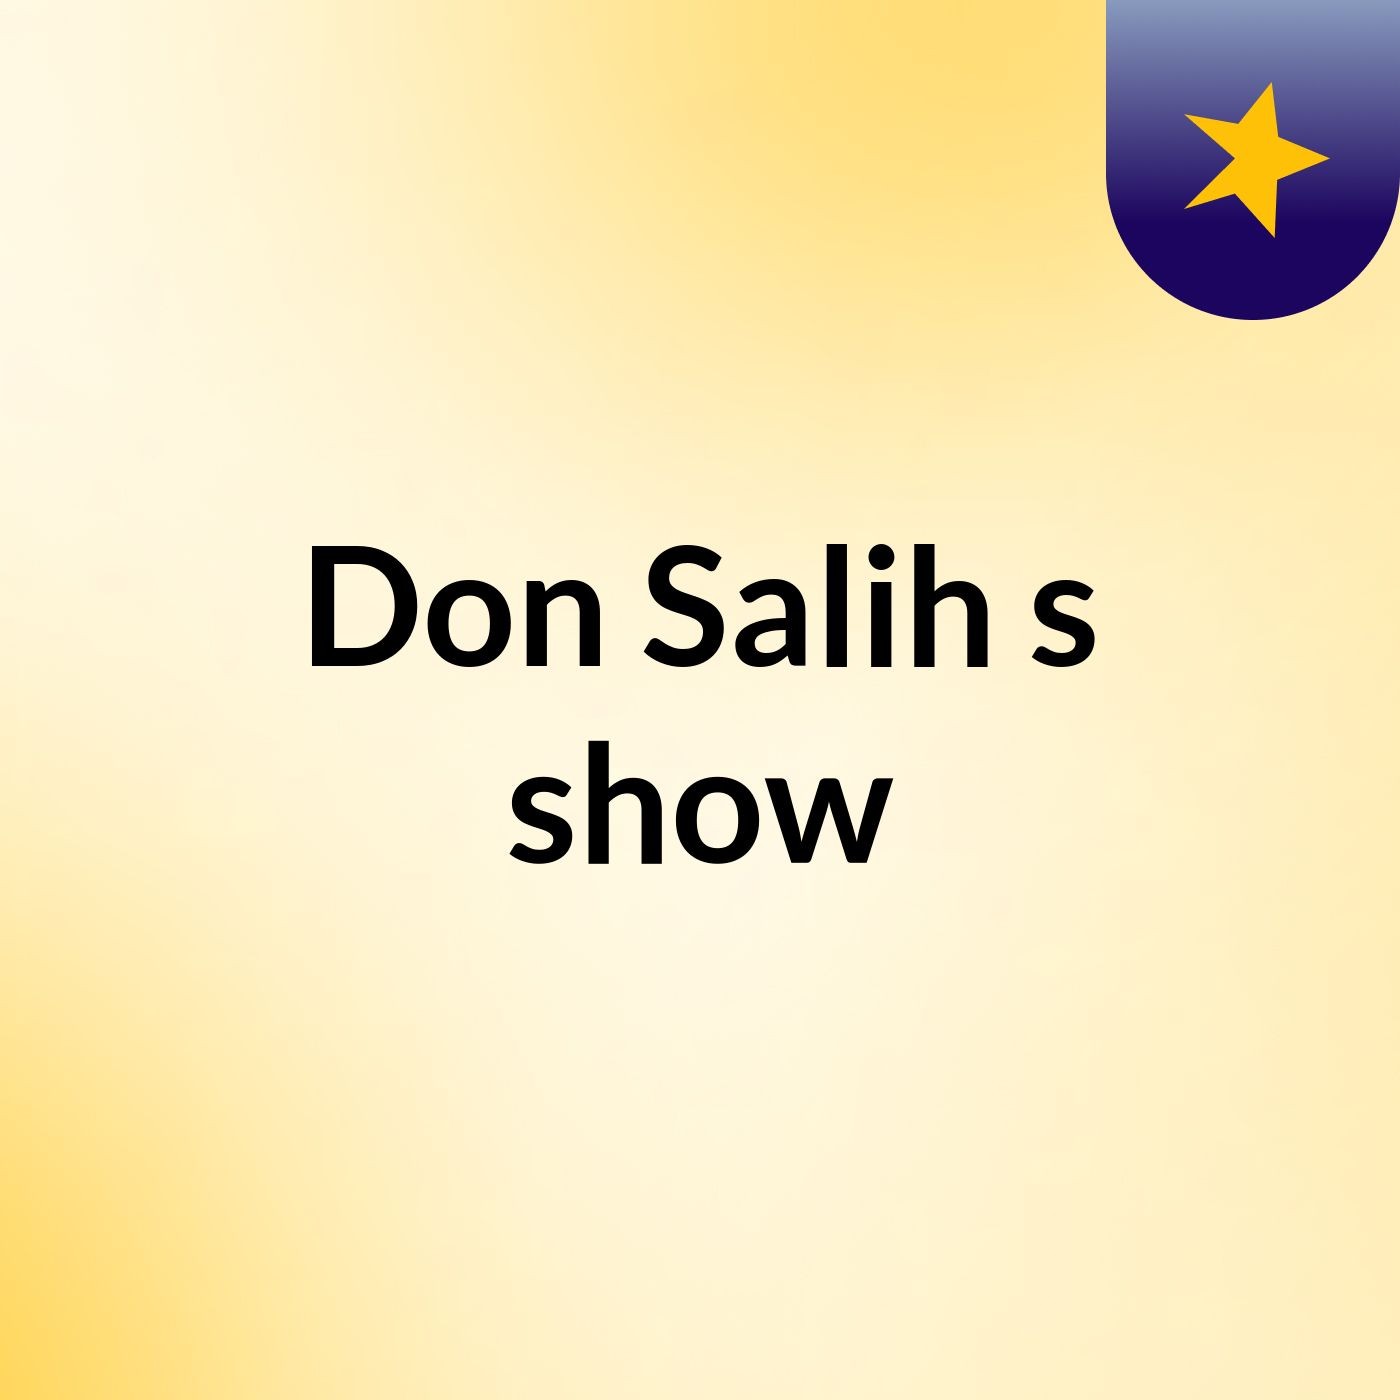 Don Salih's show